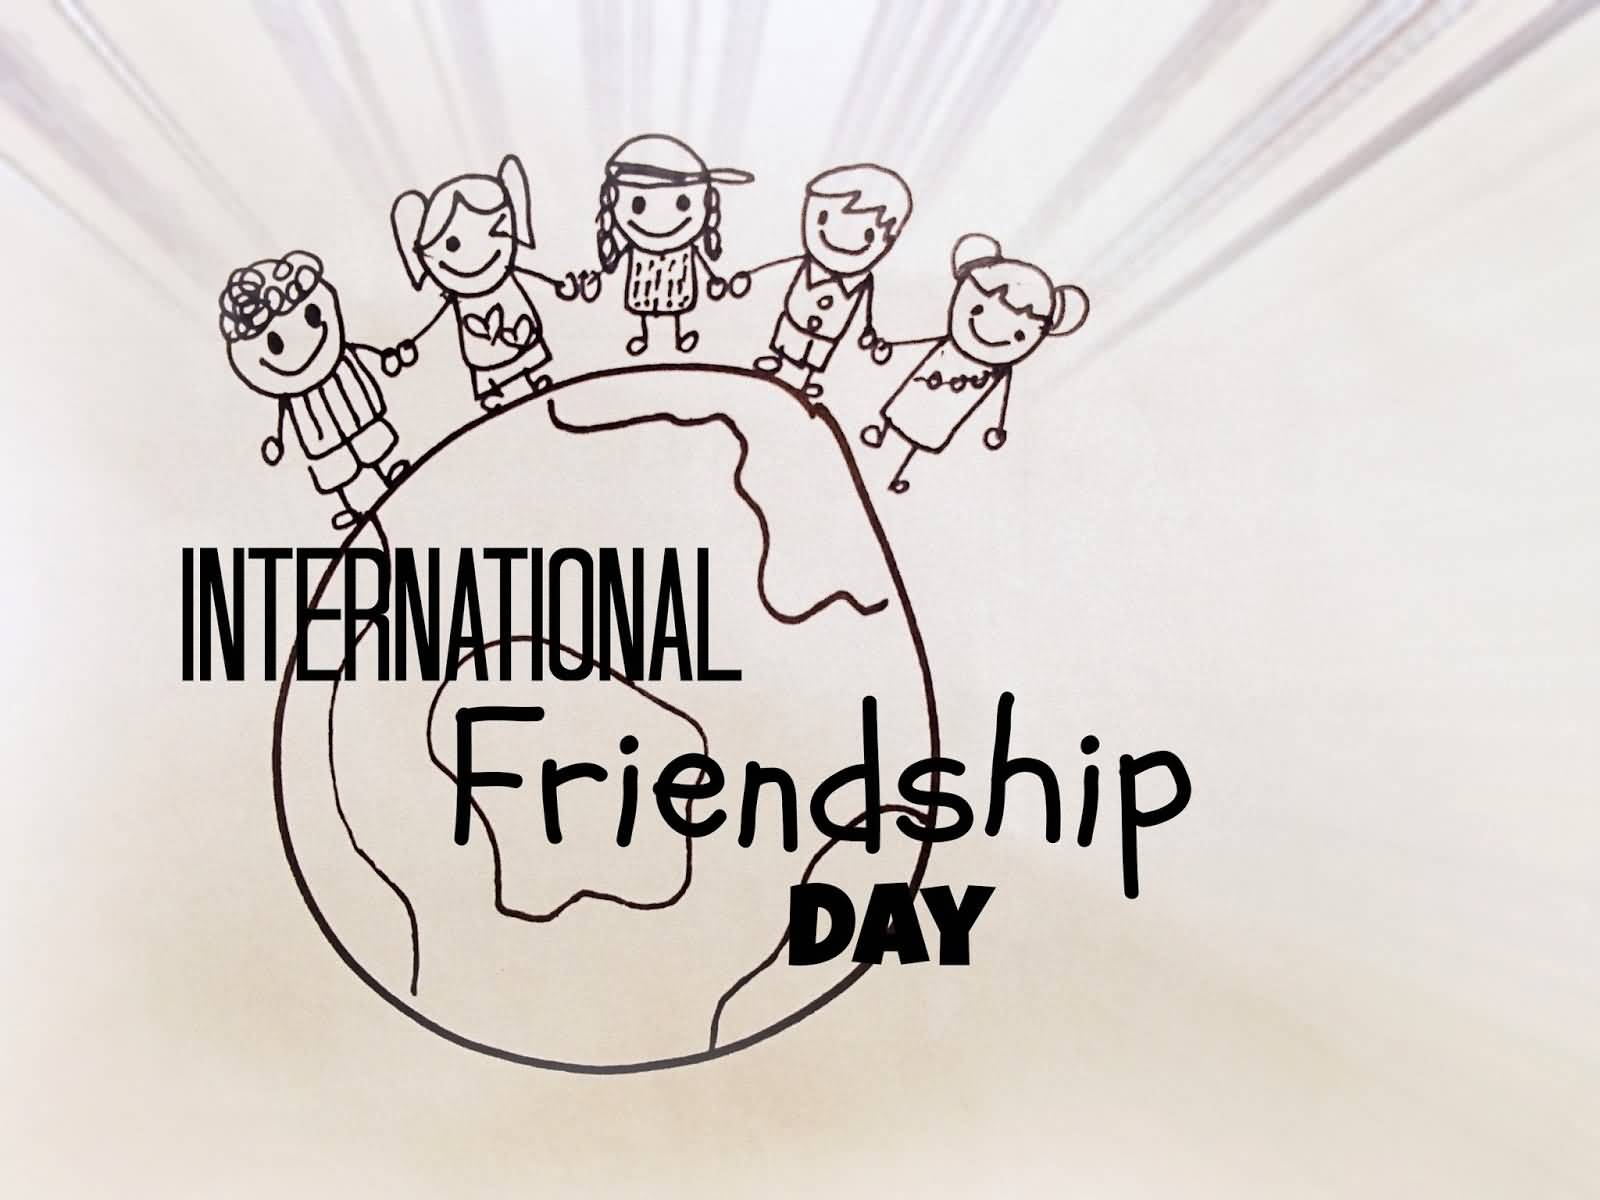 International Friendship Day Cartoon Image